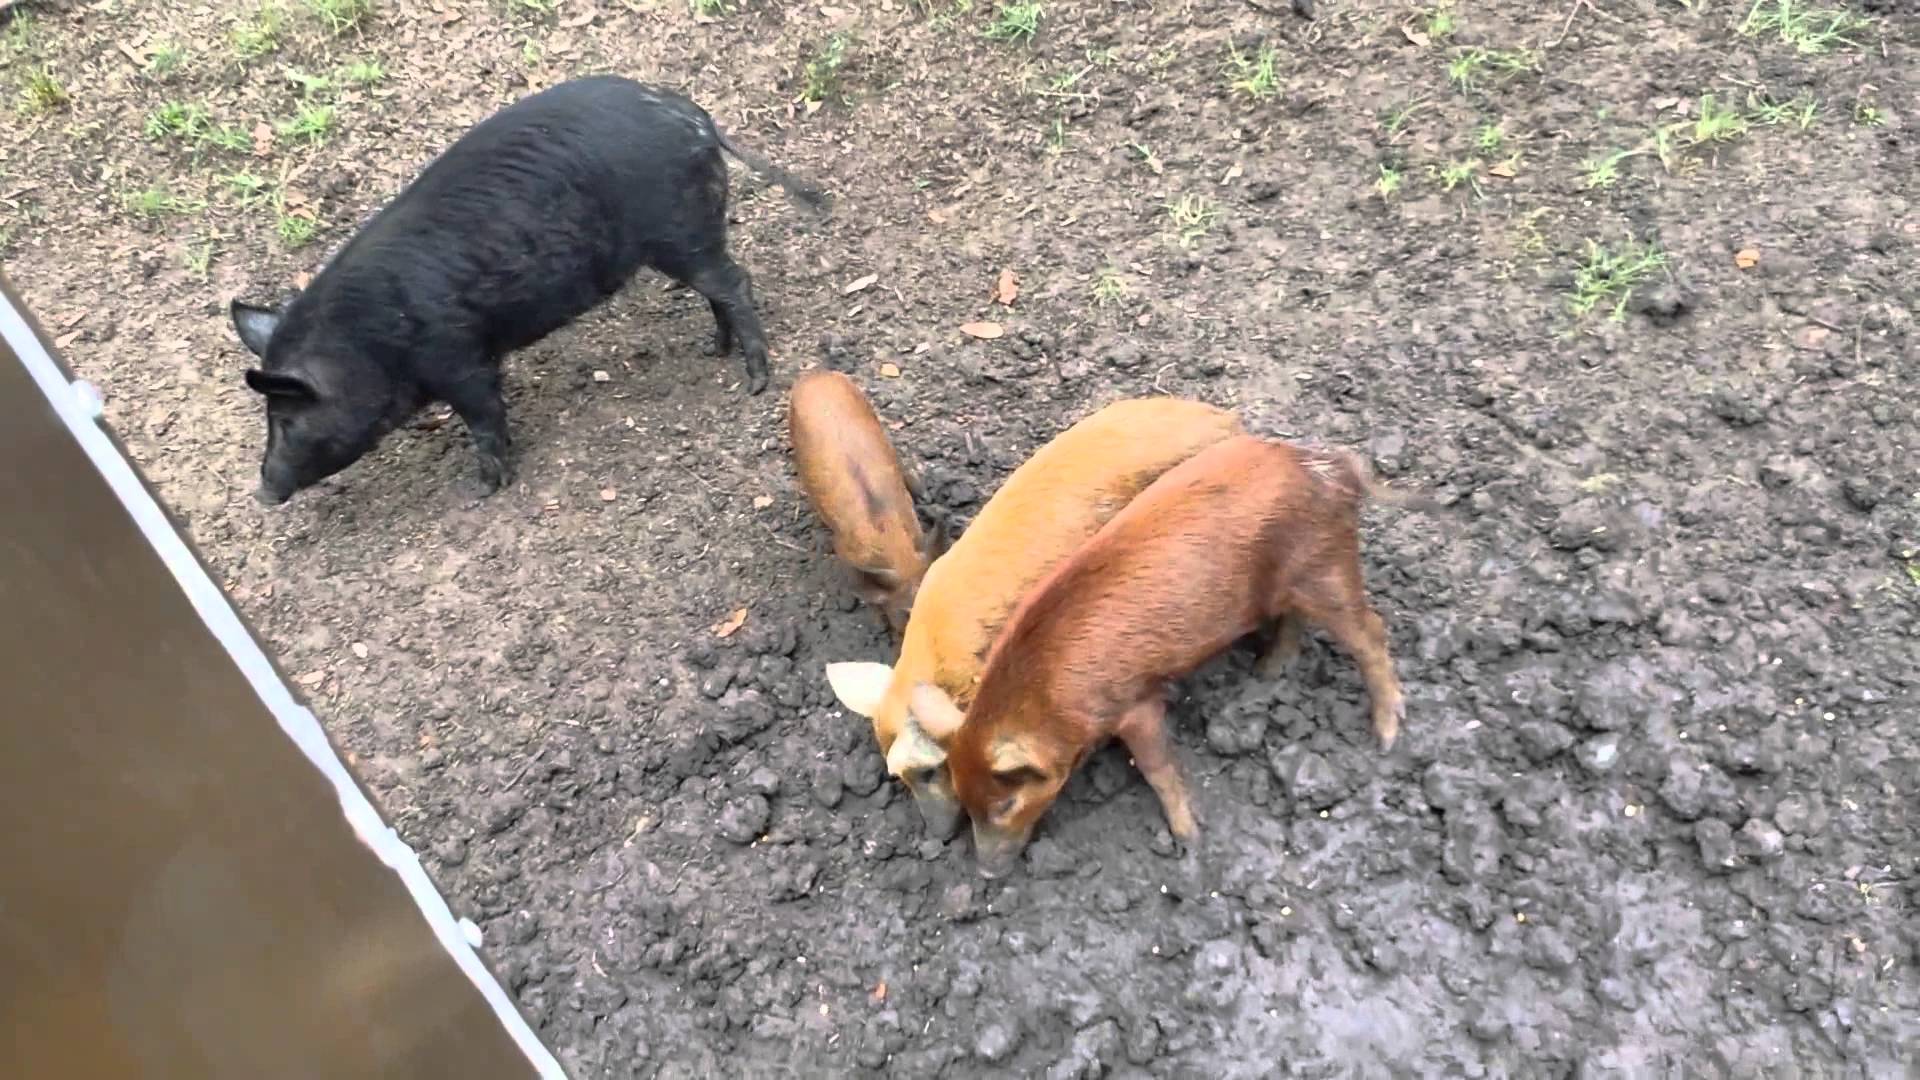 Feeding wild hogs in Sargeant, TX - YouTube